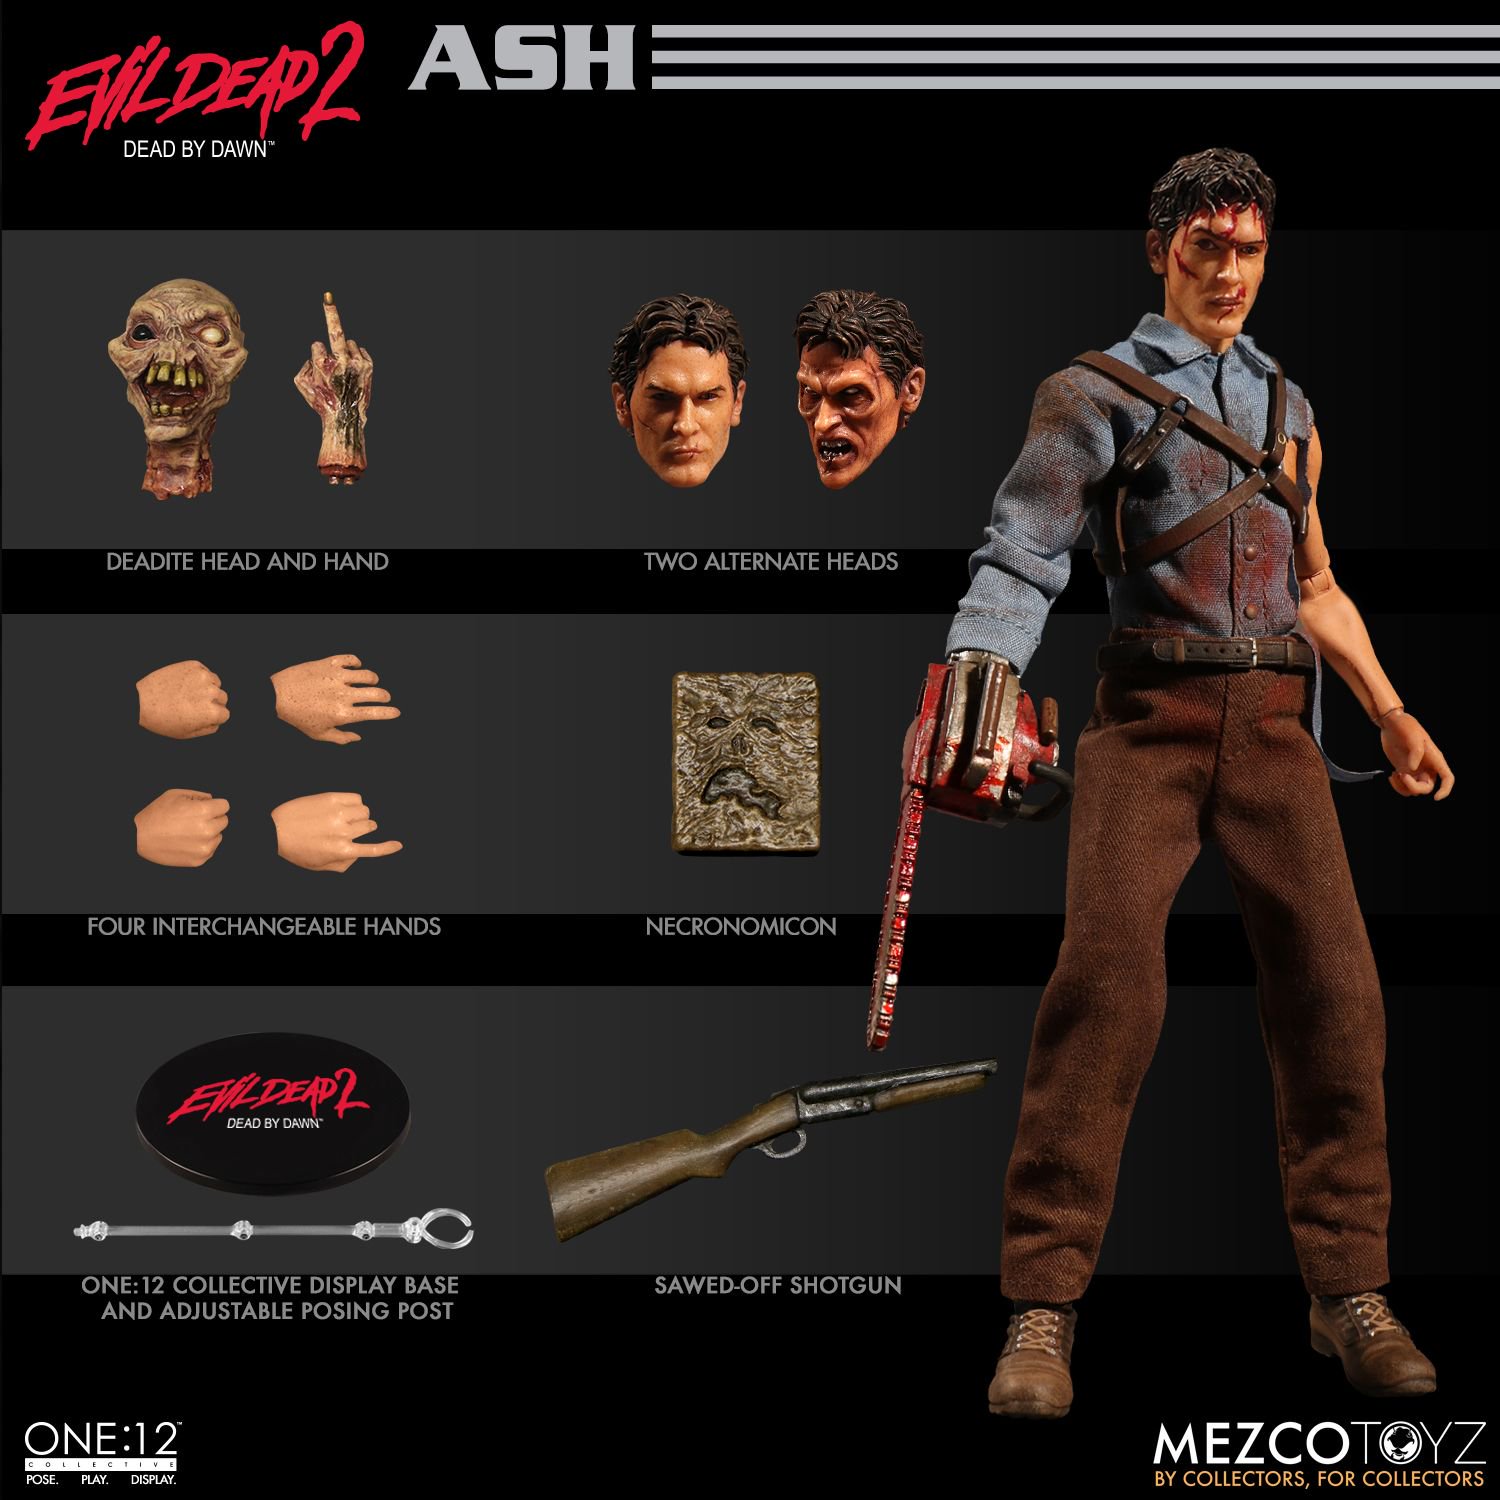 Mezco-Evil-Dead-2-Ash-One12-0015.jpg